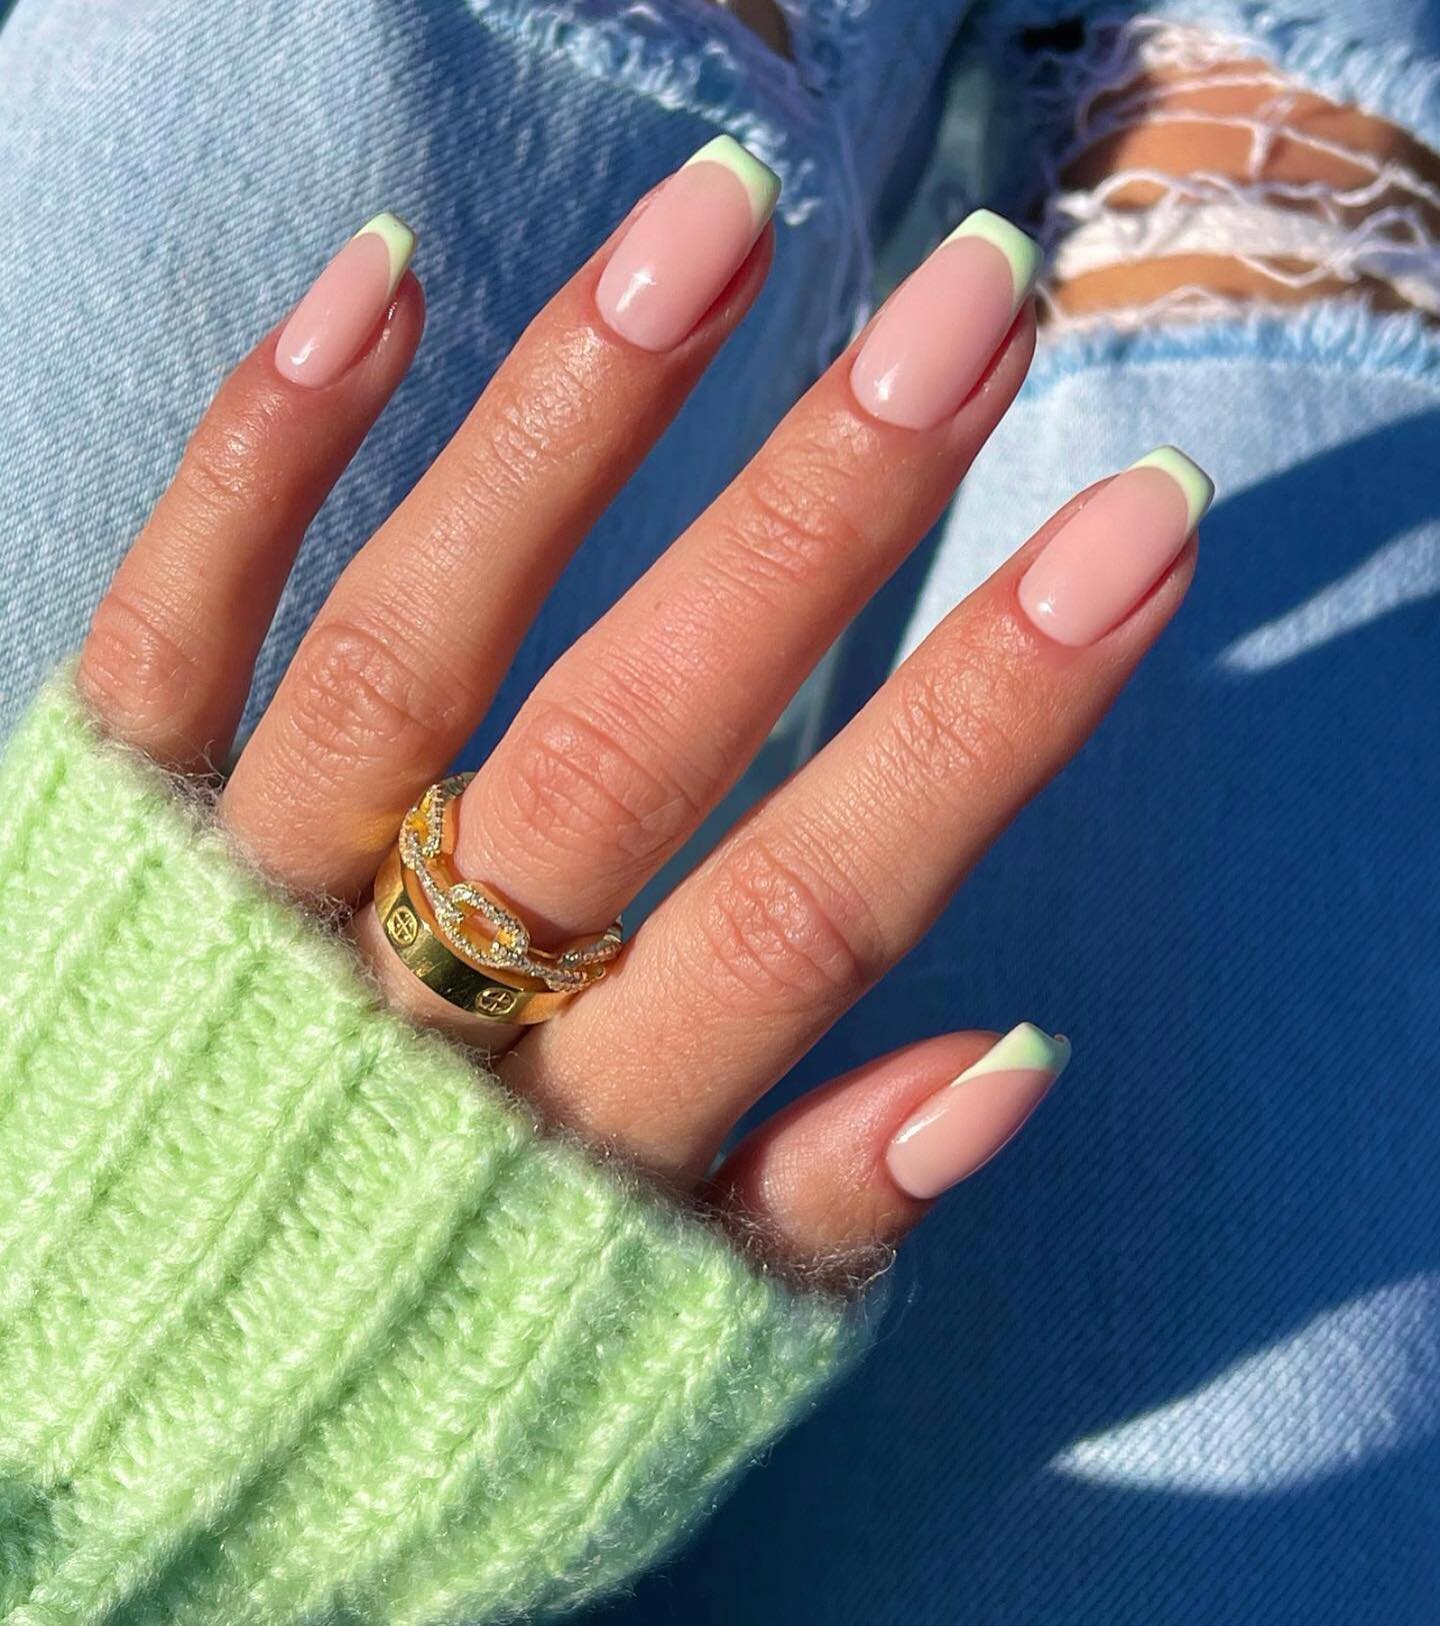 Just a little NEON nail inspo to start your week...🍀💚
Nails: @gelsbybry 
.
.
.
.
.
.
.
#vaultbeauty #vaultartist #vaultverified #nails #nailart #nailsofinstagram #nailsonfleek #nailinspo #naildesign